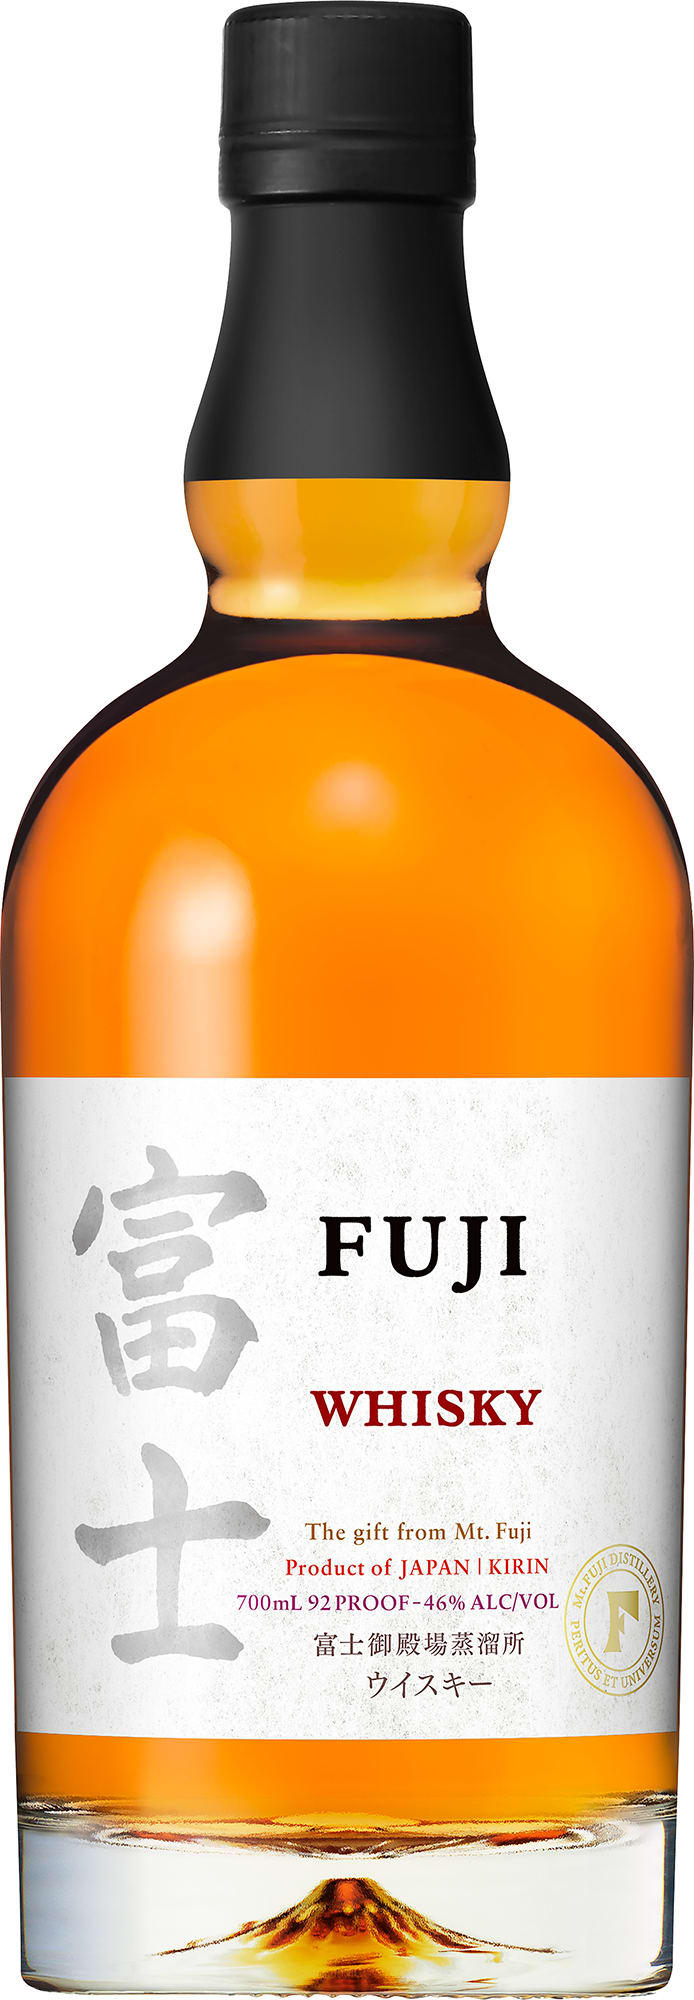 Fuji Whisky, Japan